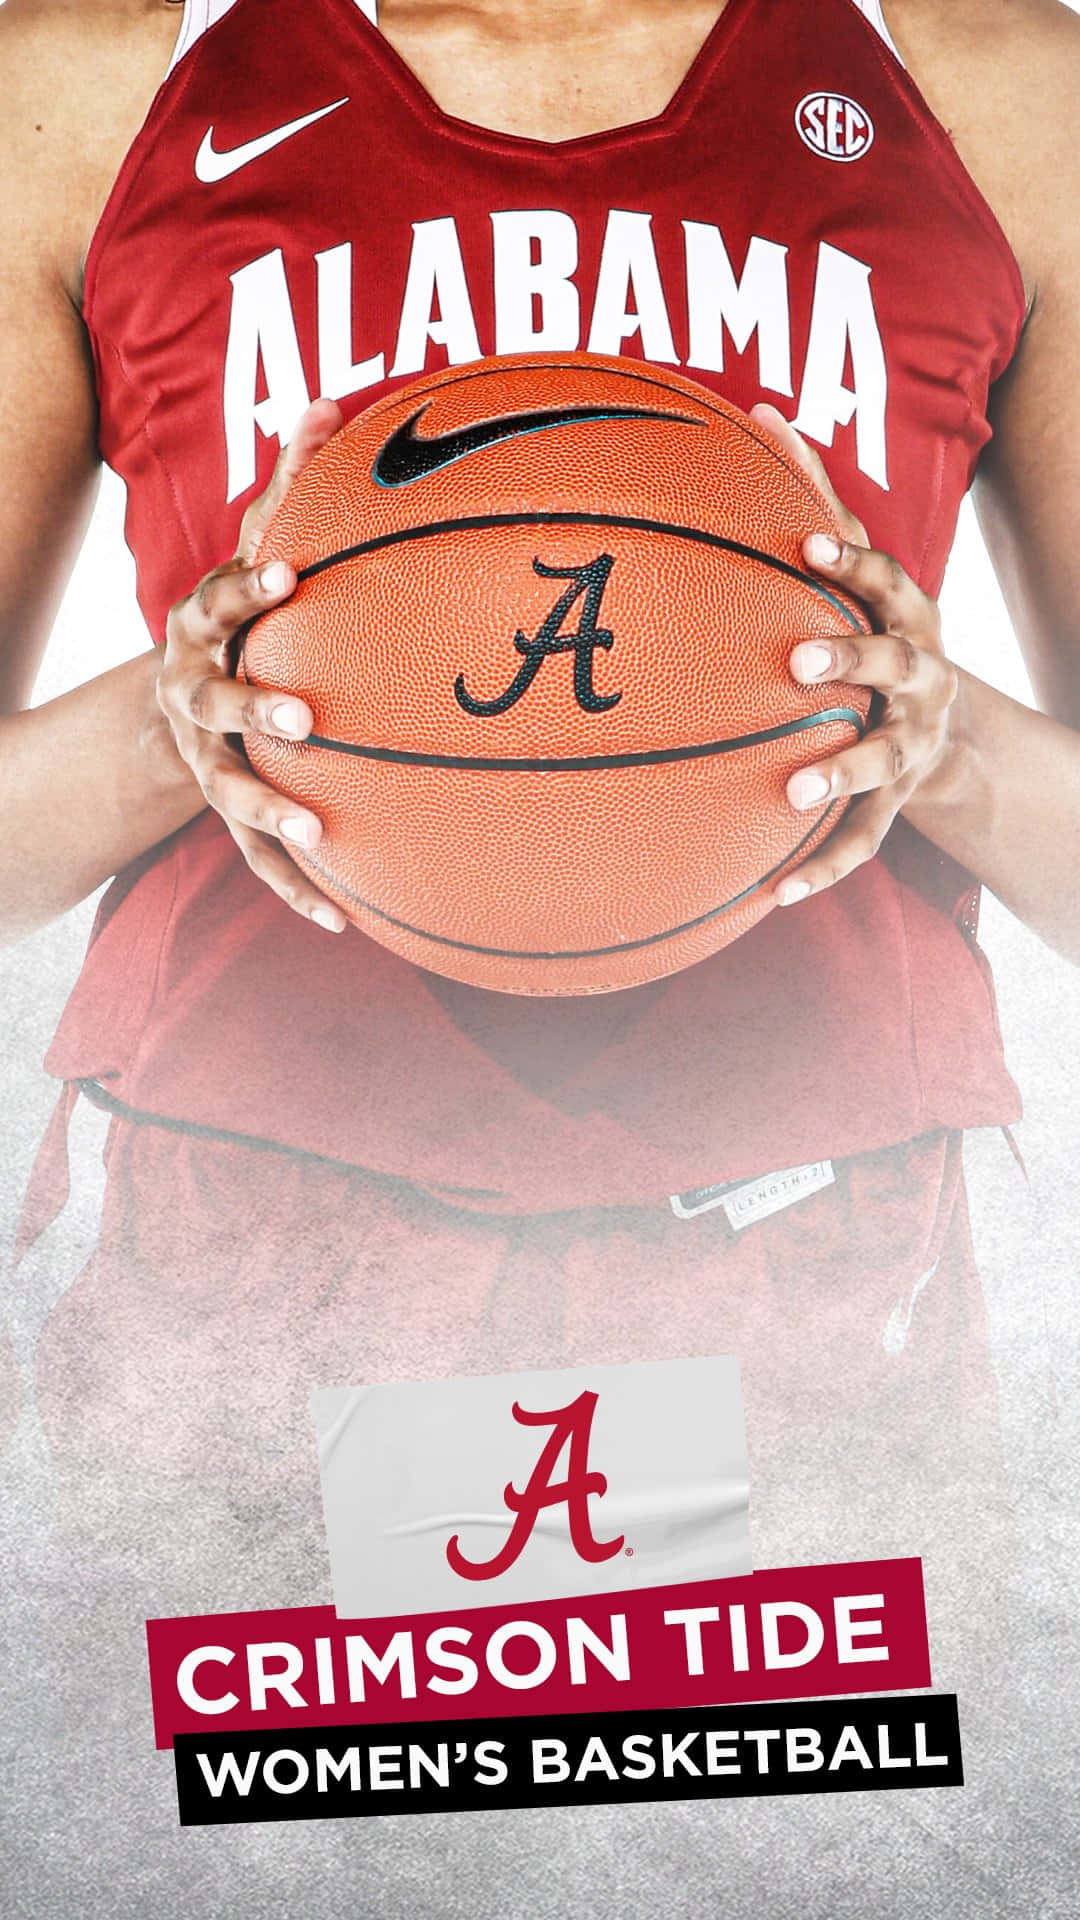 Alabama Basketball Wallpaper